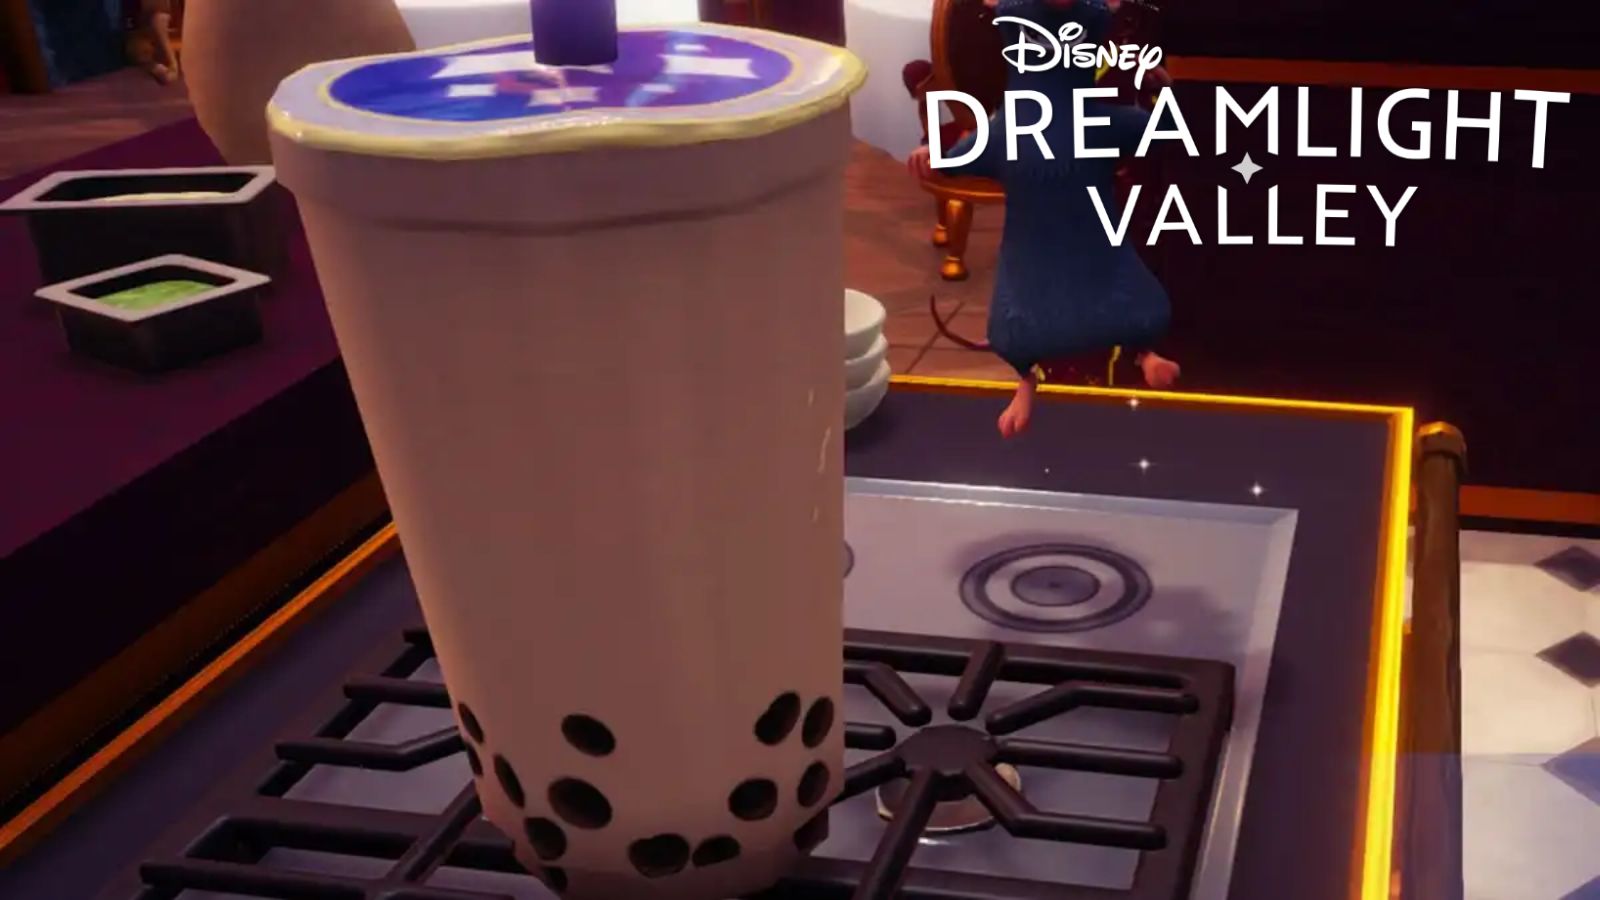 All Boba Tea recipes in Disney Dreamlight Valley: Coconut, Raspberry & more